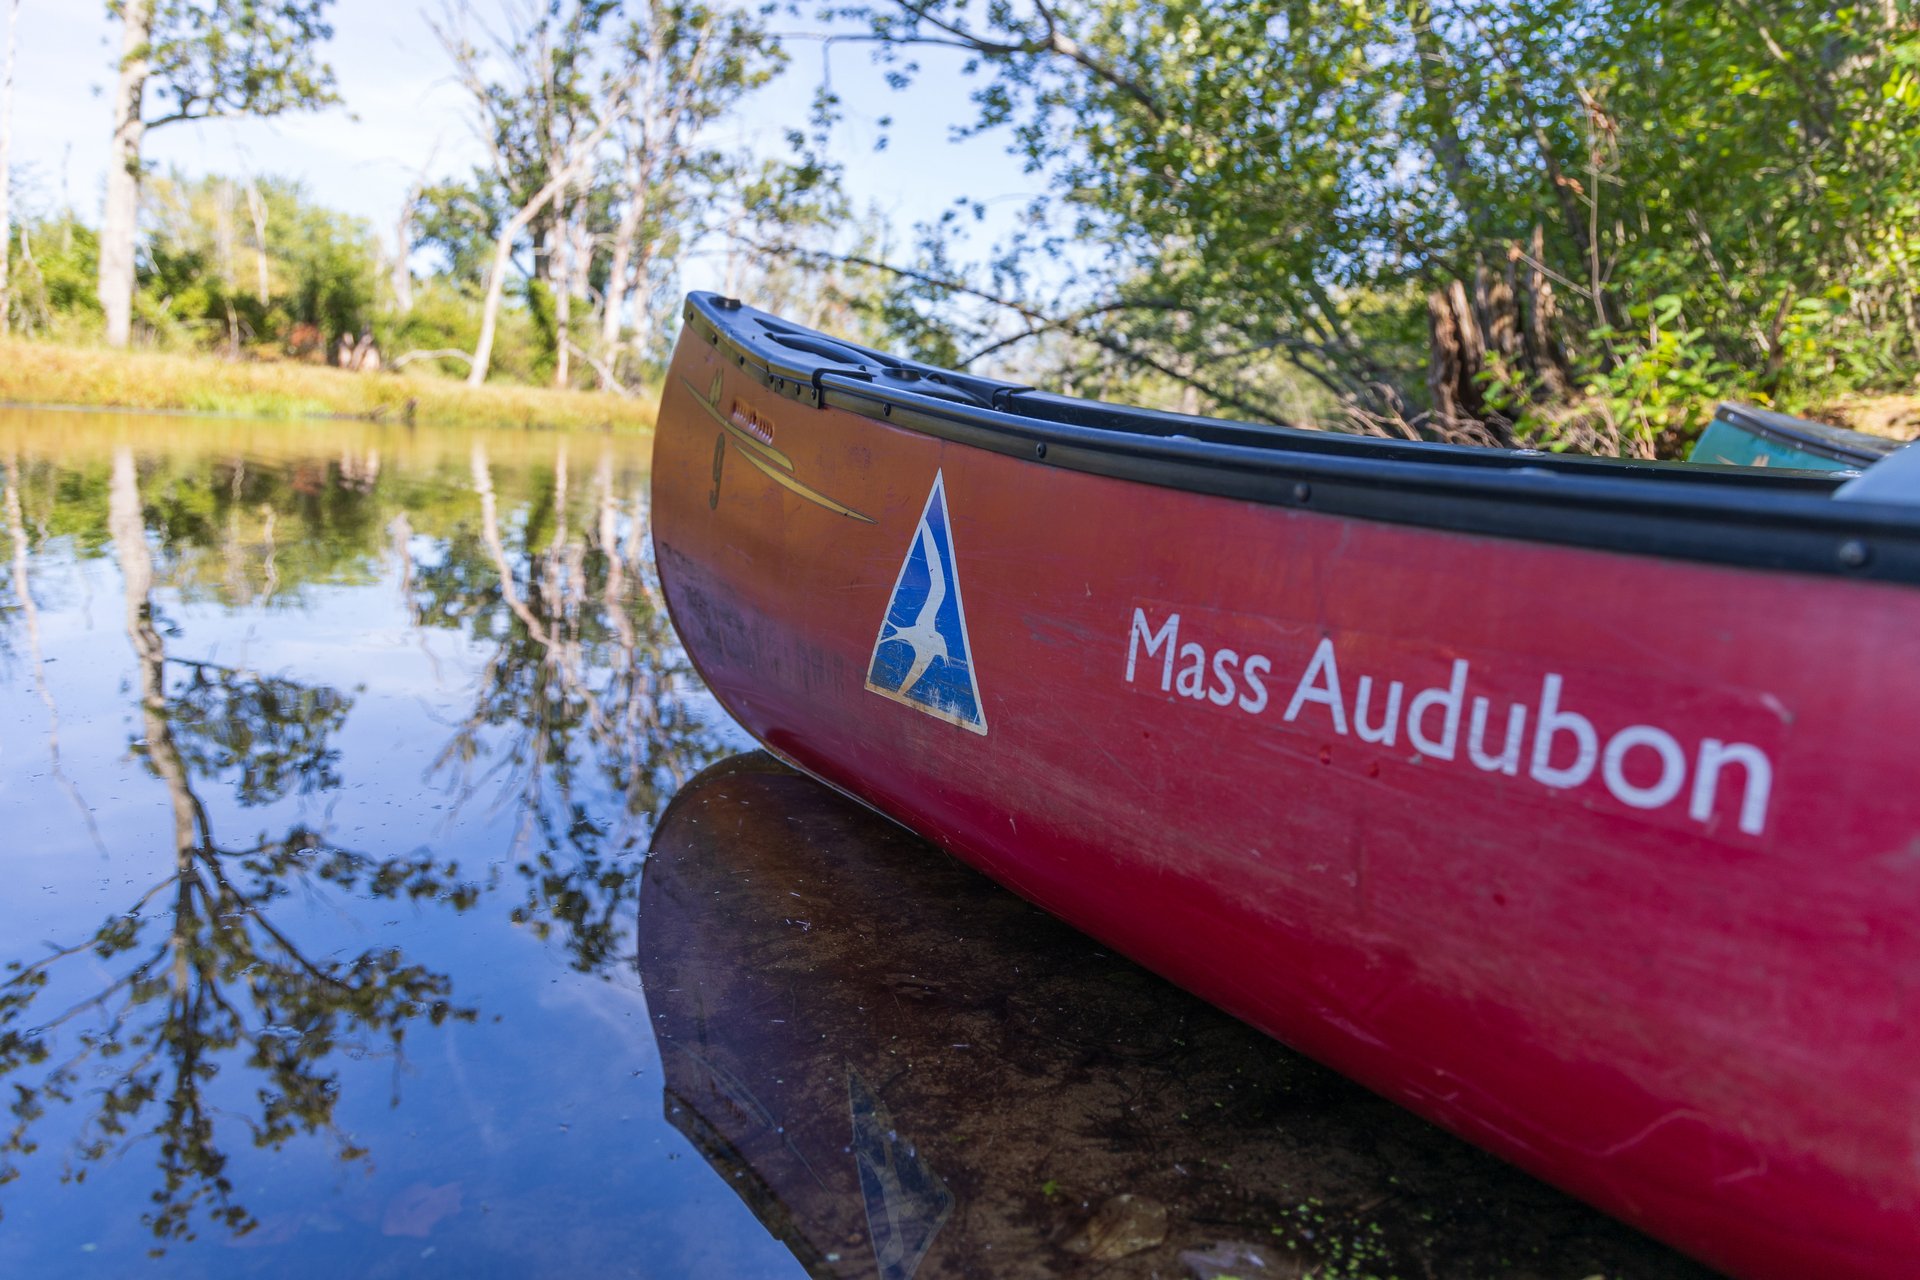 up close shot of a canoe with Mass Audubon logo